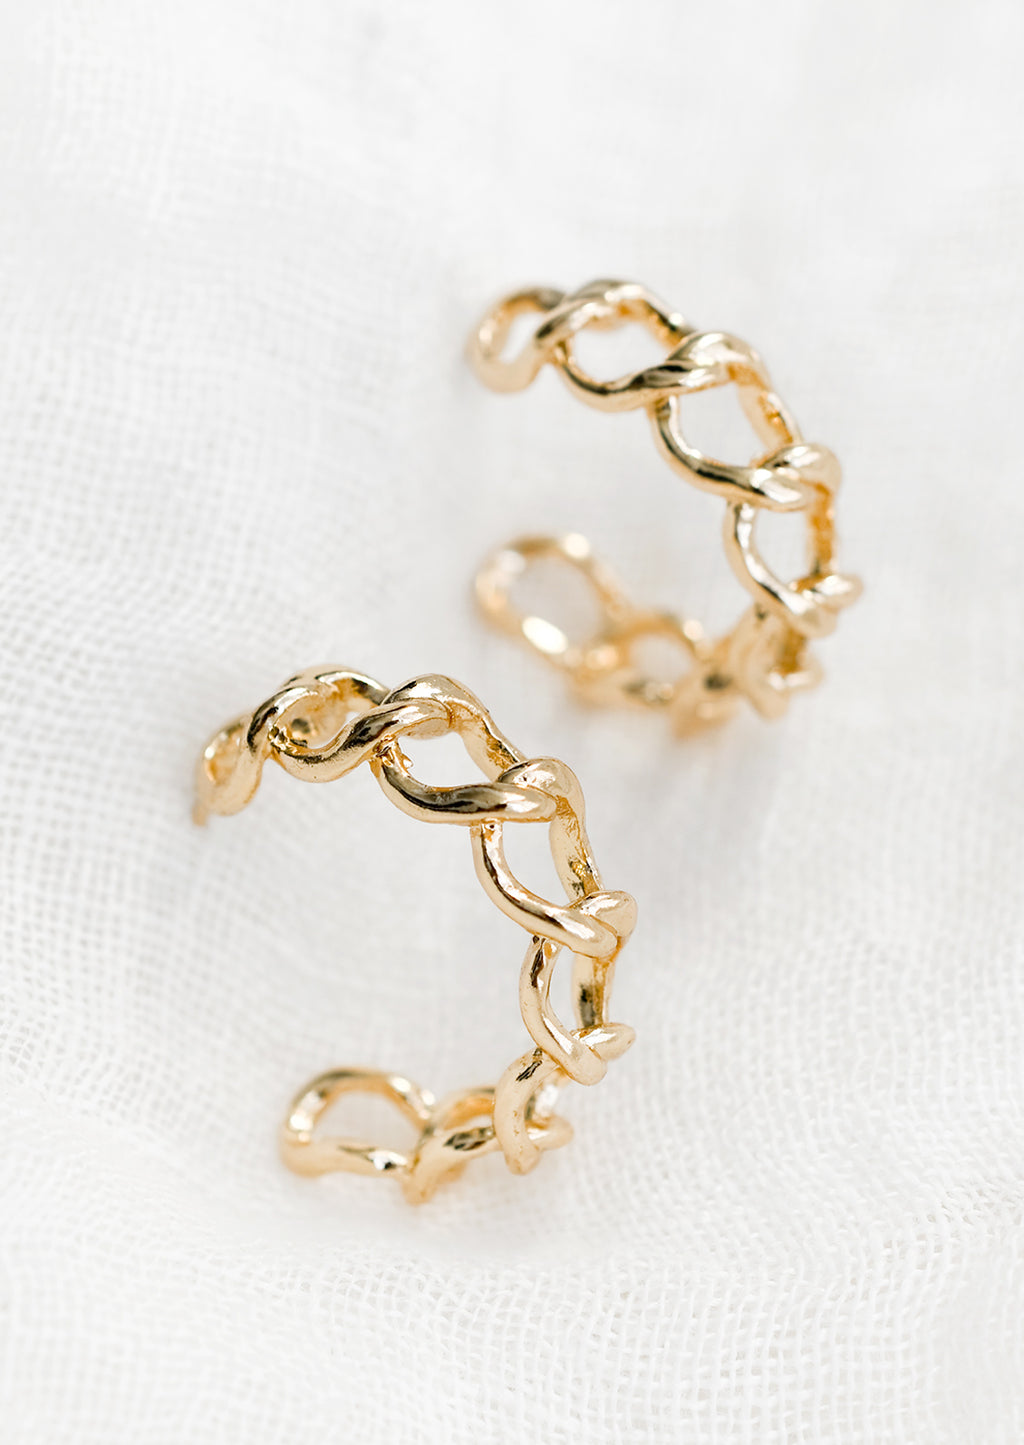 Gold: A pair of chainlink hoop earrings in gold.